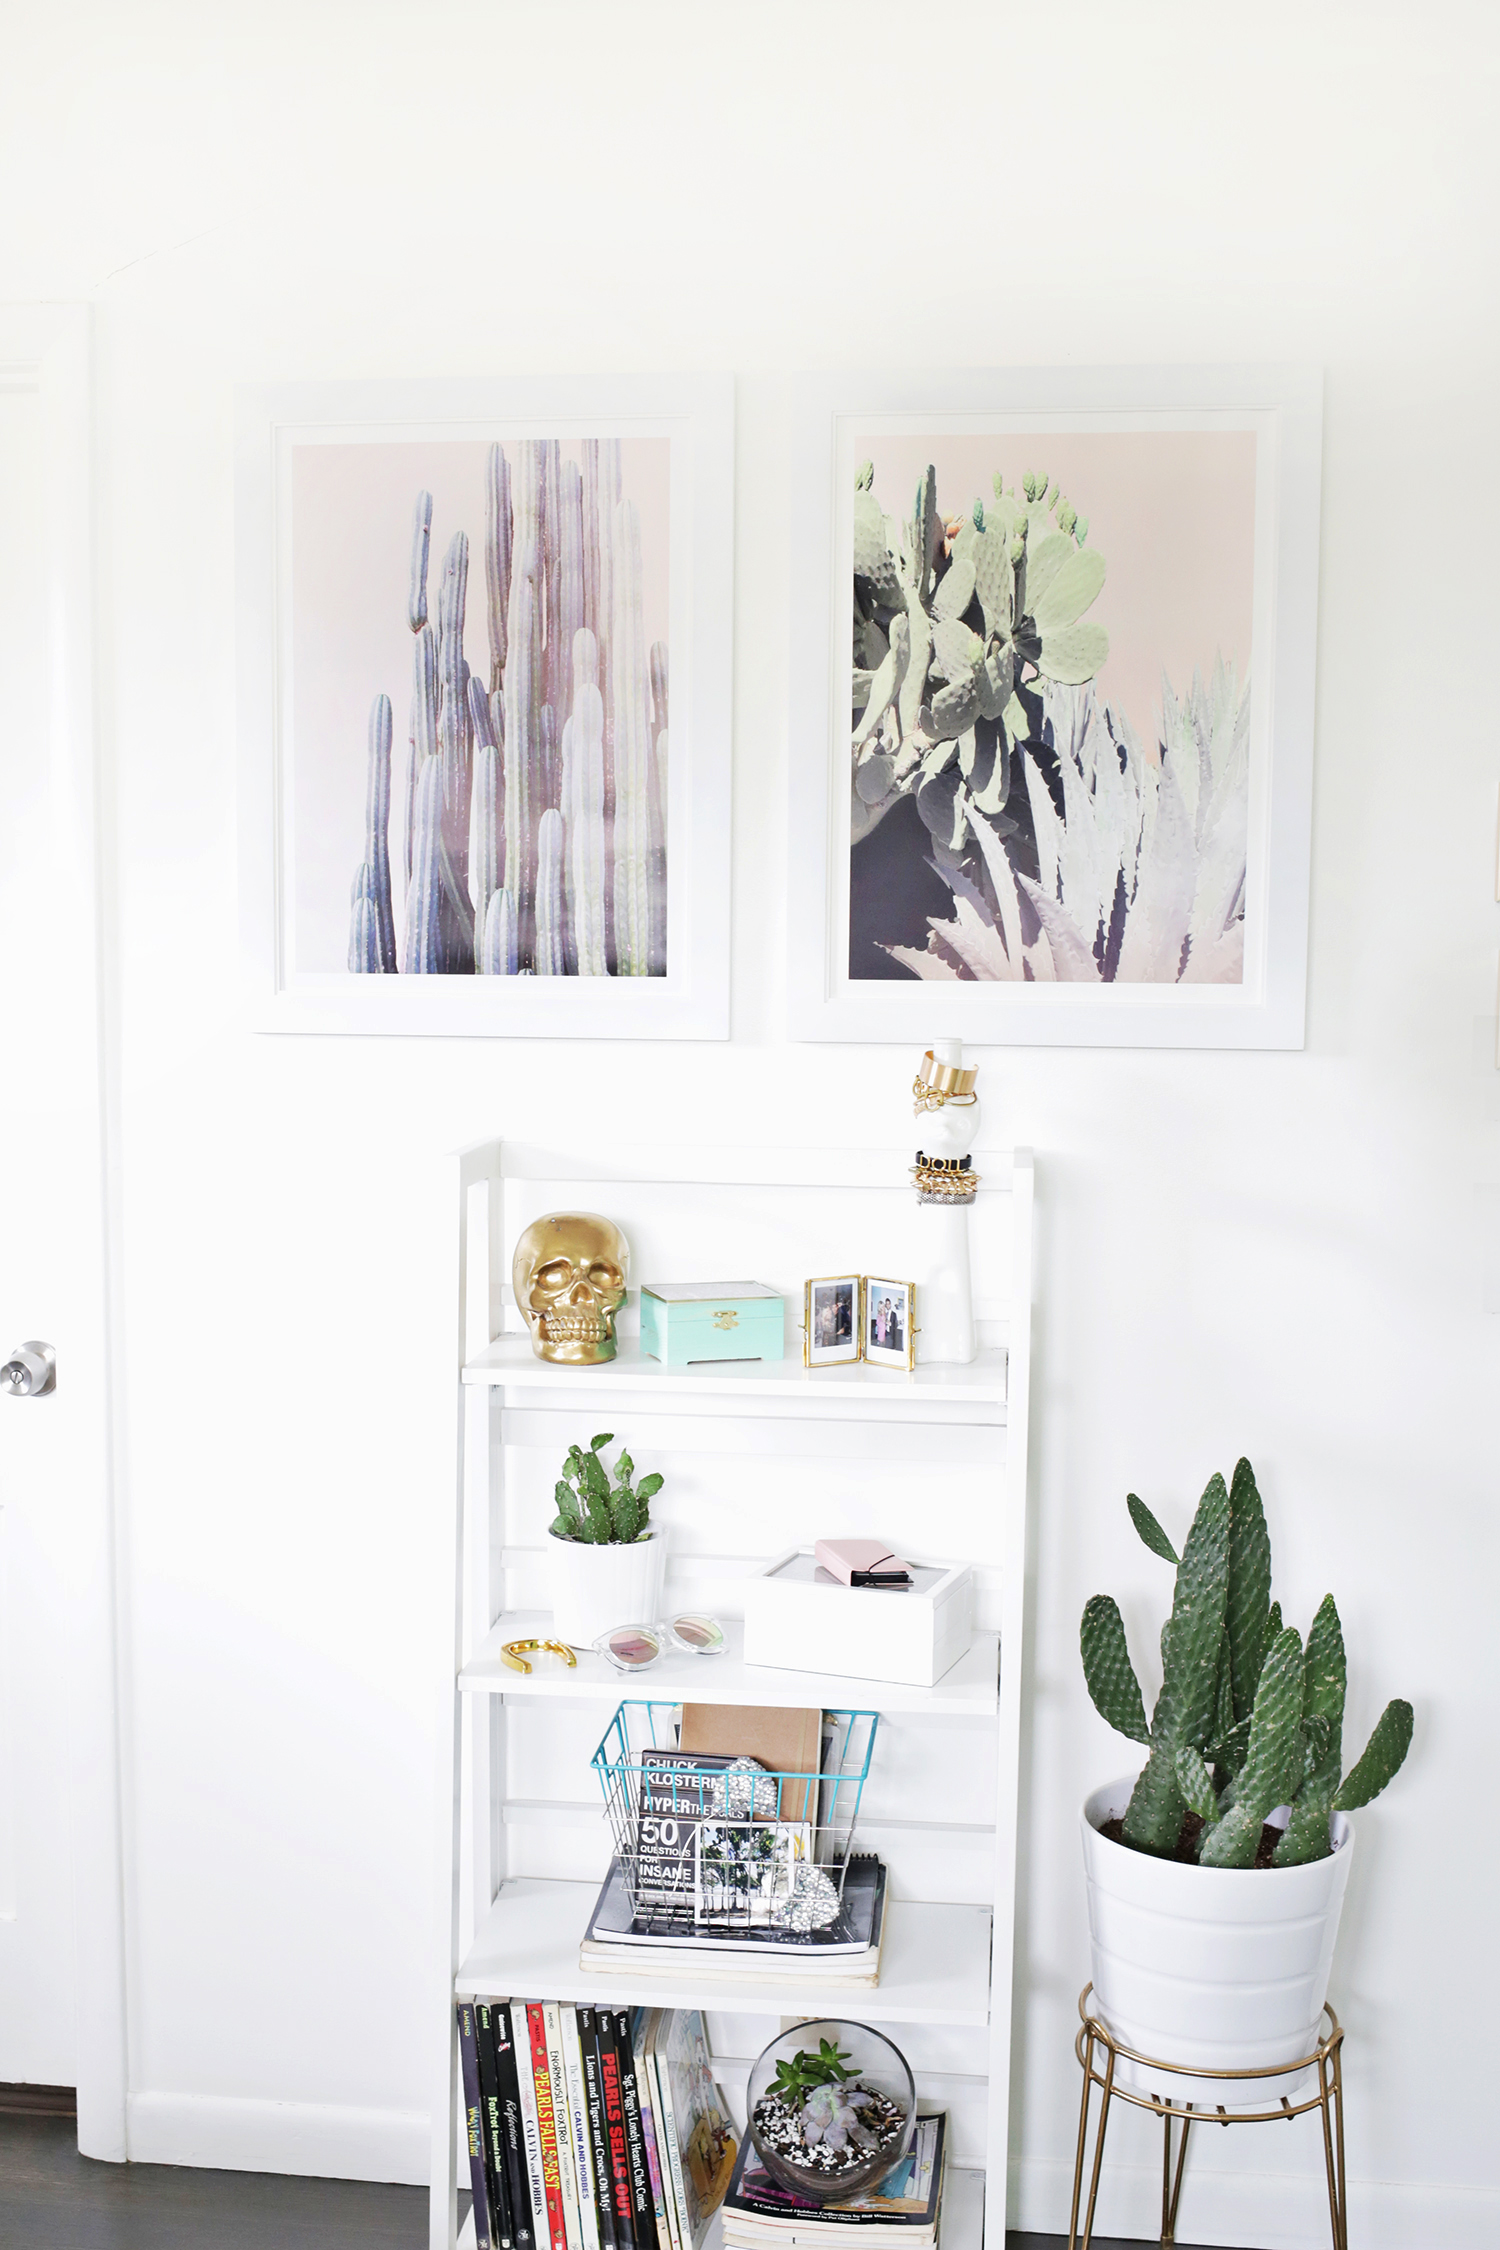 Pastel cactus prints make a soft, stylish statement